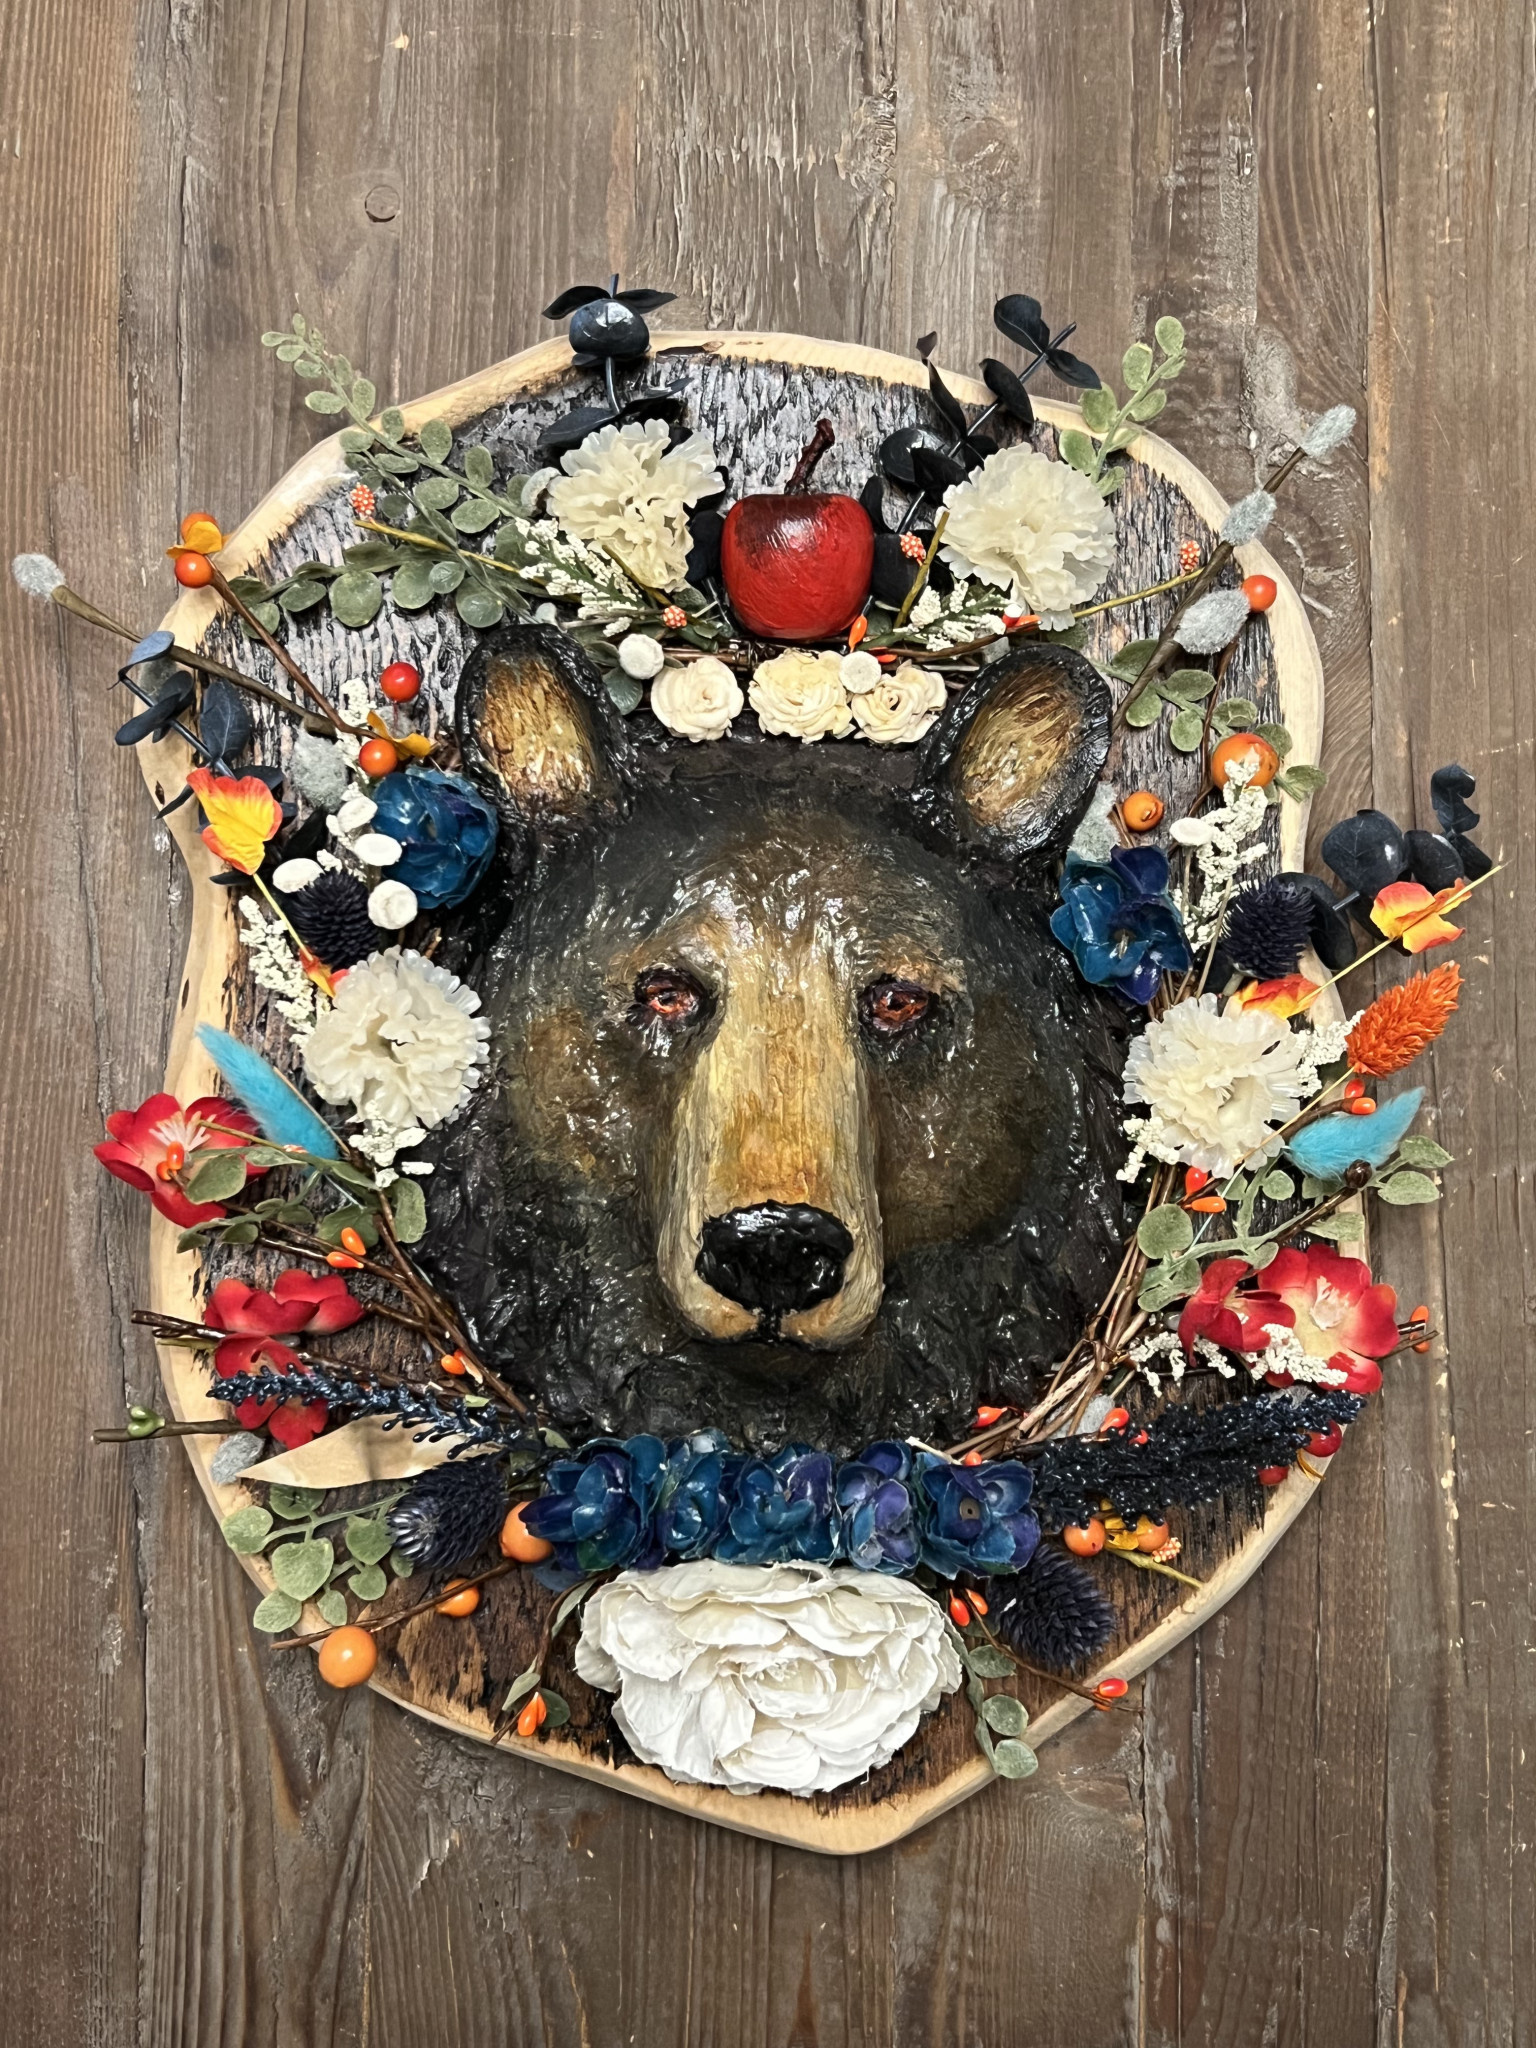 Mama Bear – Amy Heitman